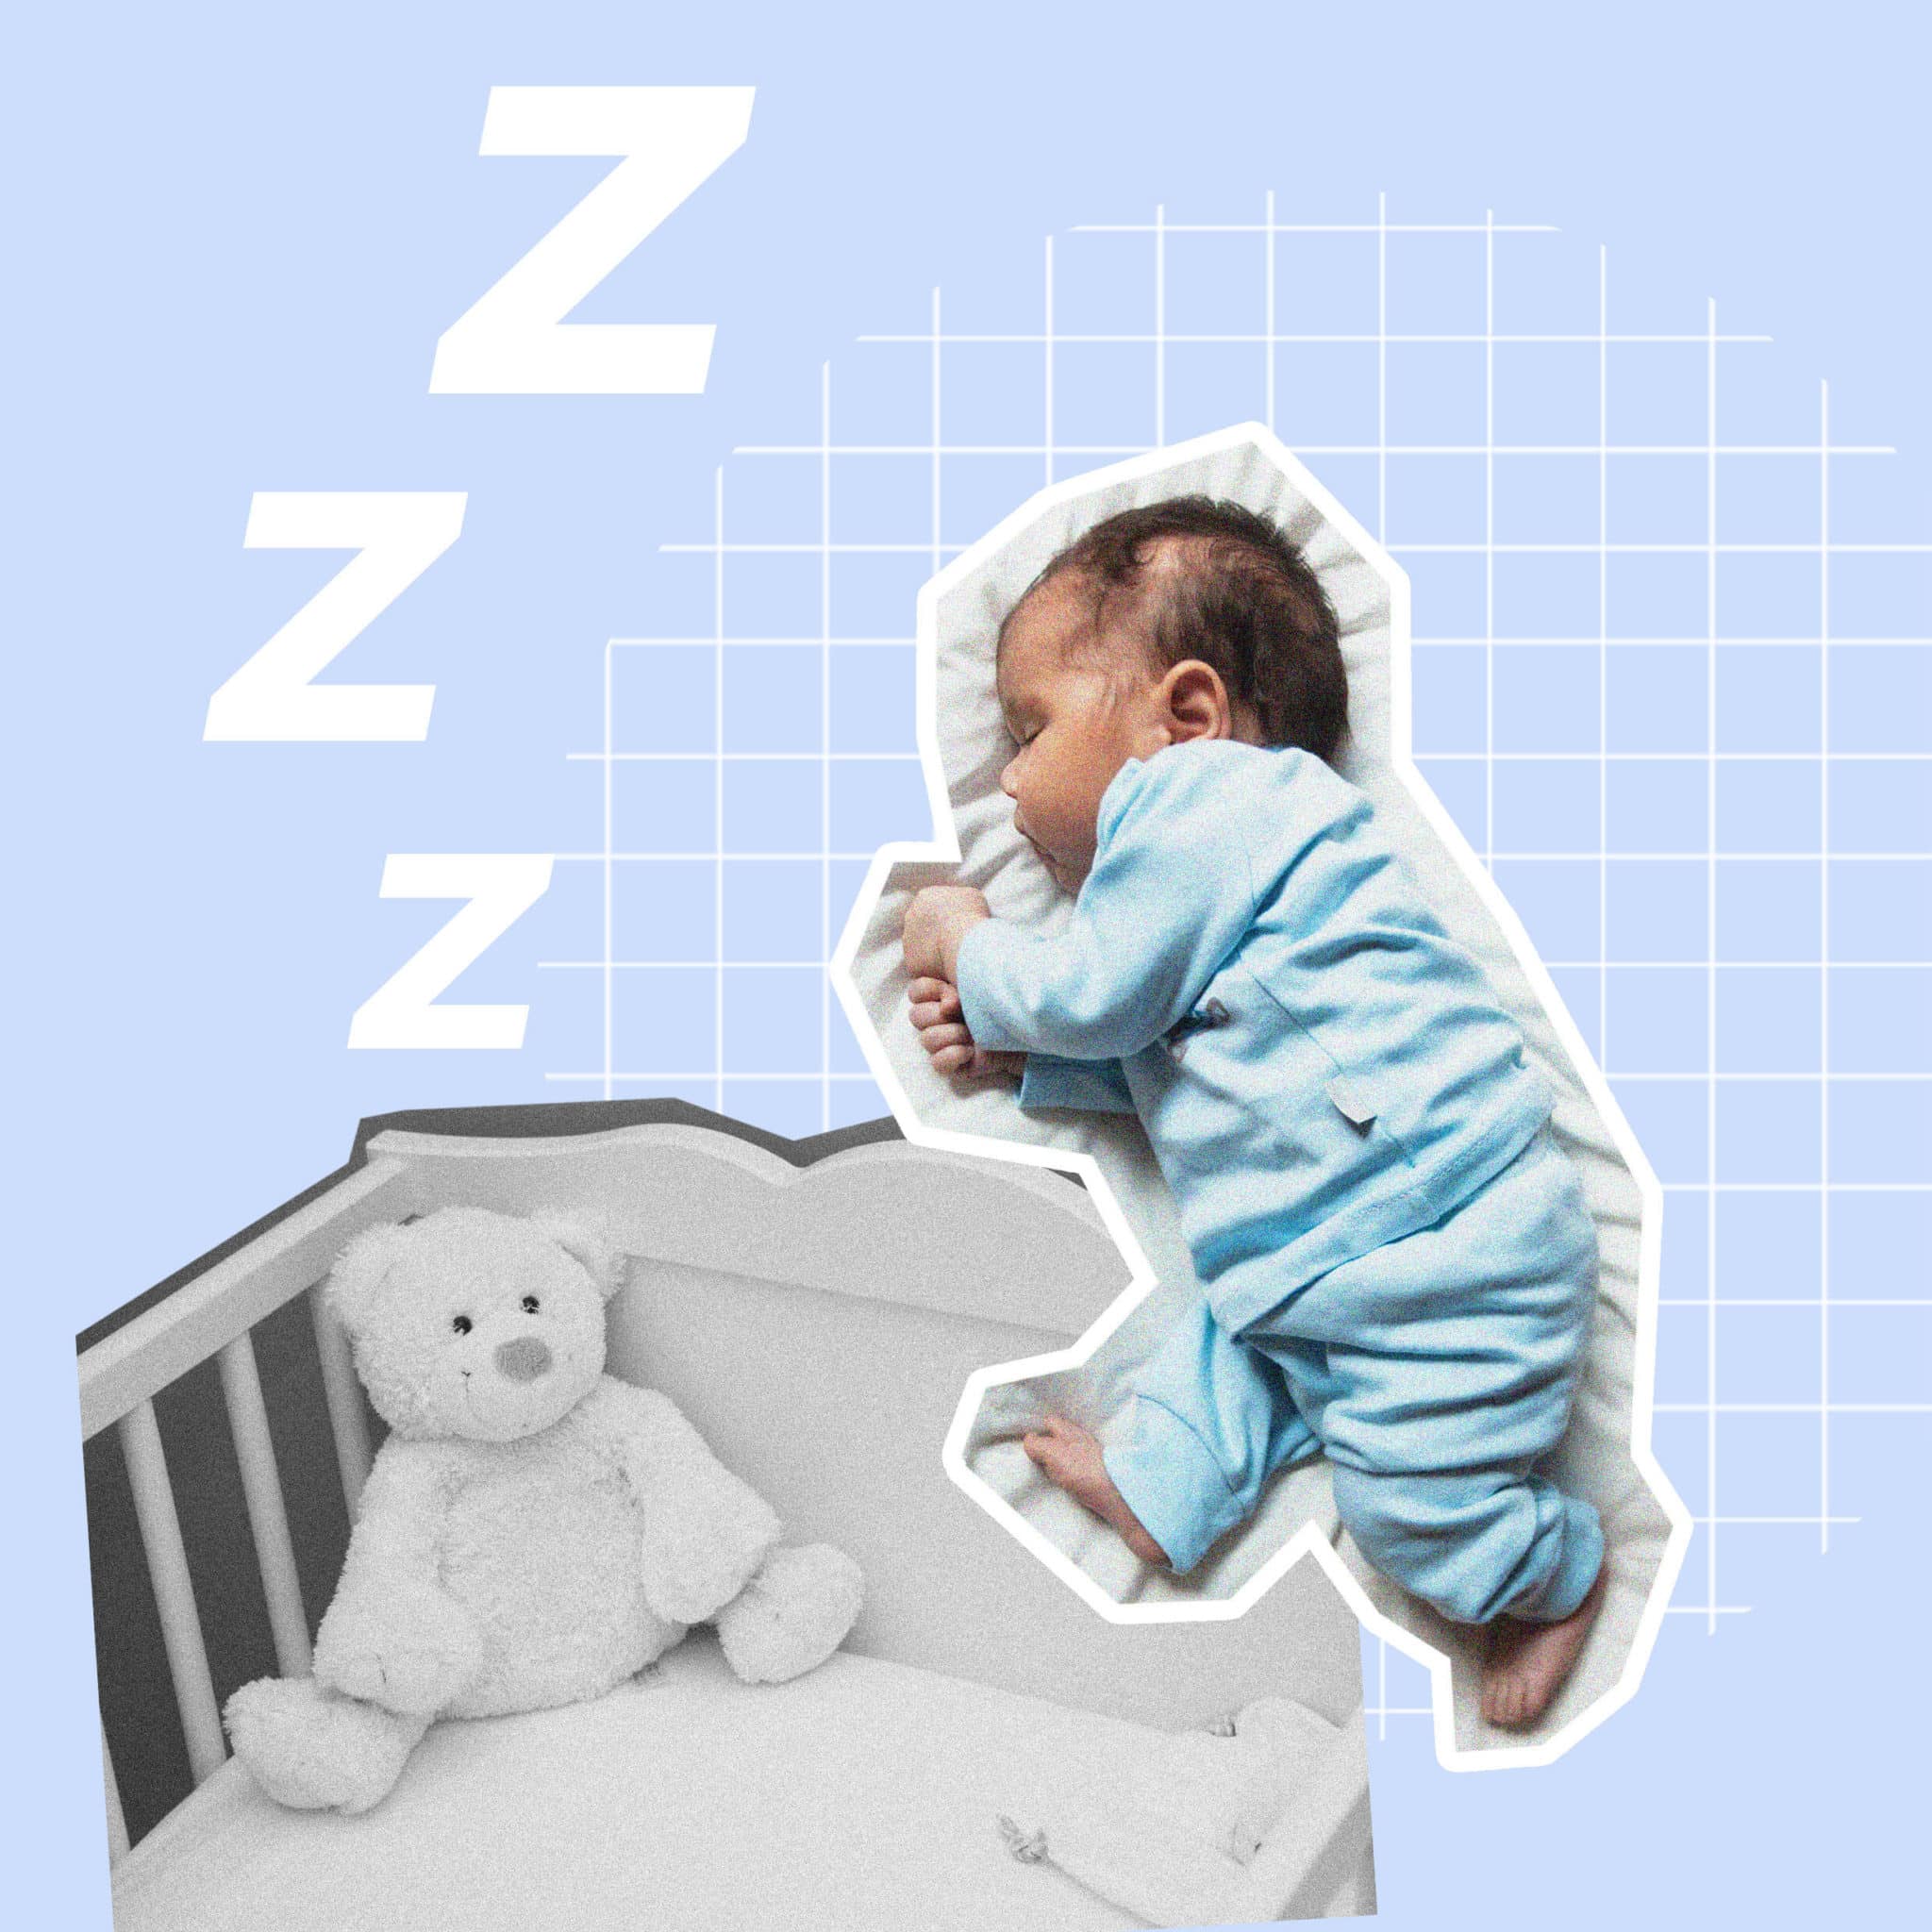 SOS: Save Our Sleep